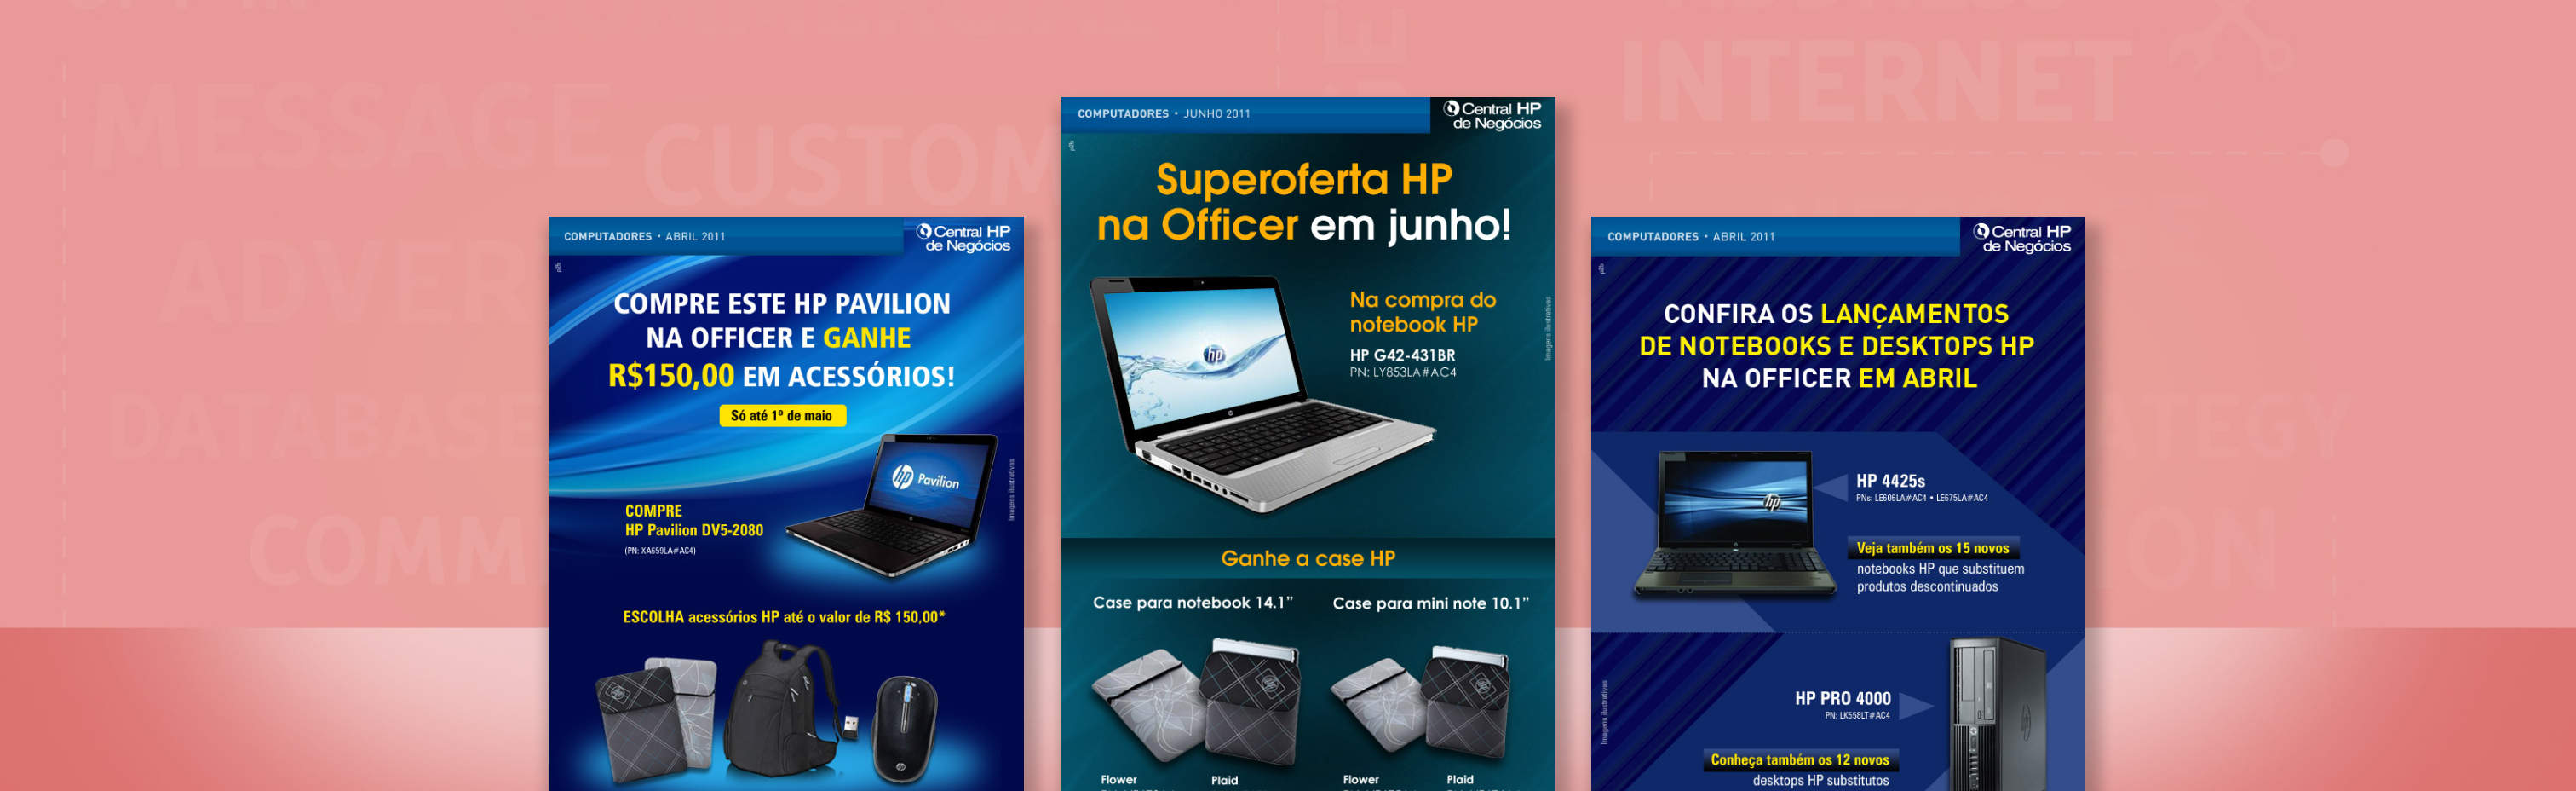 Newsletter de vendas para produtos HP